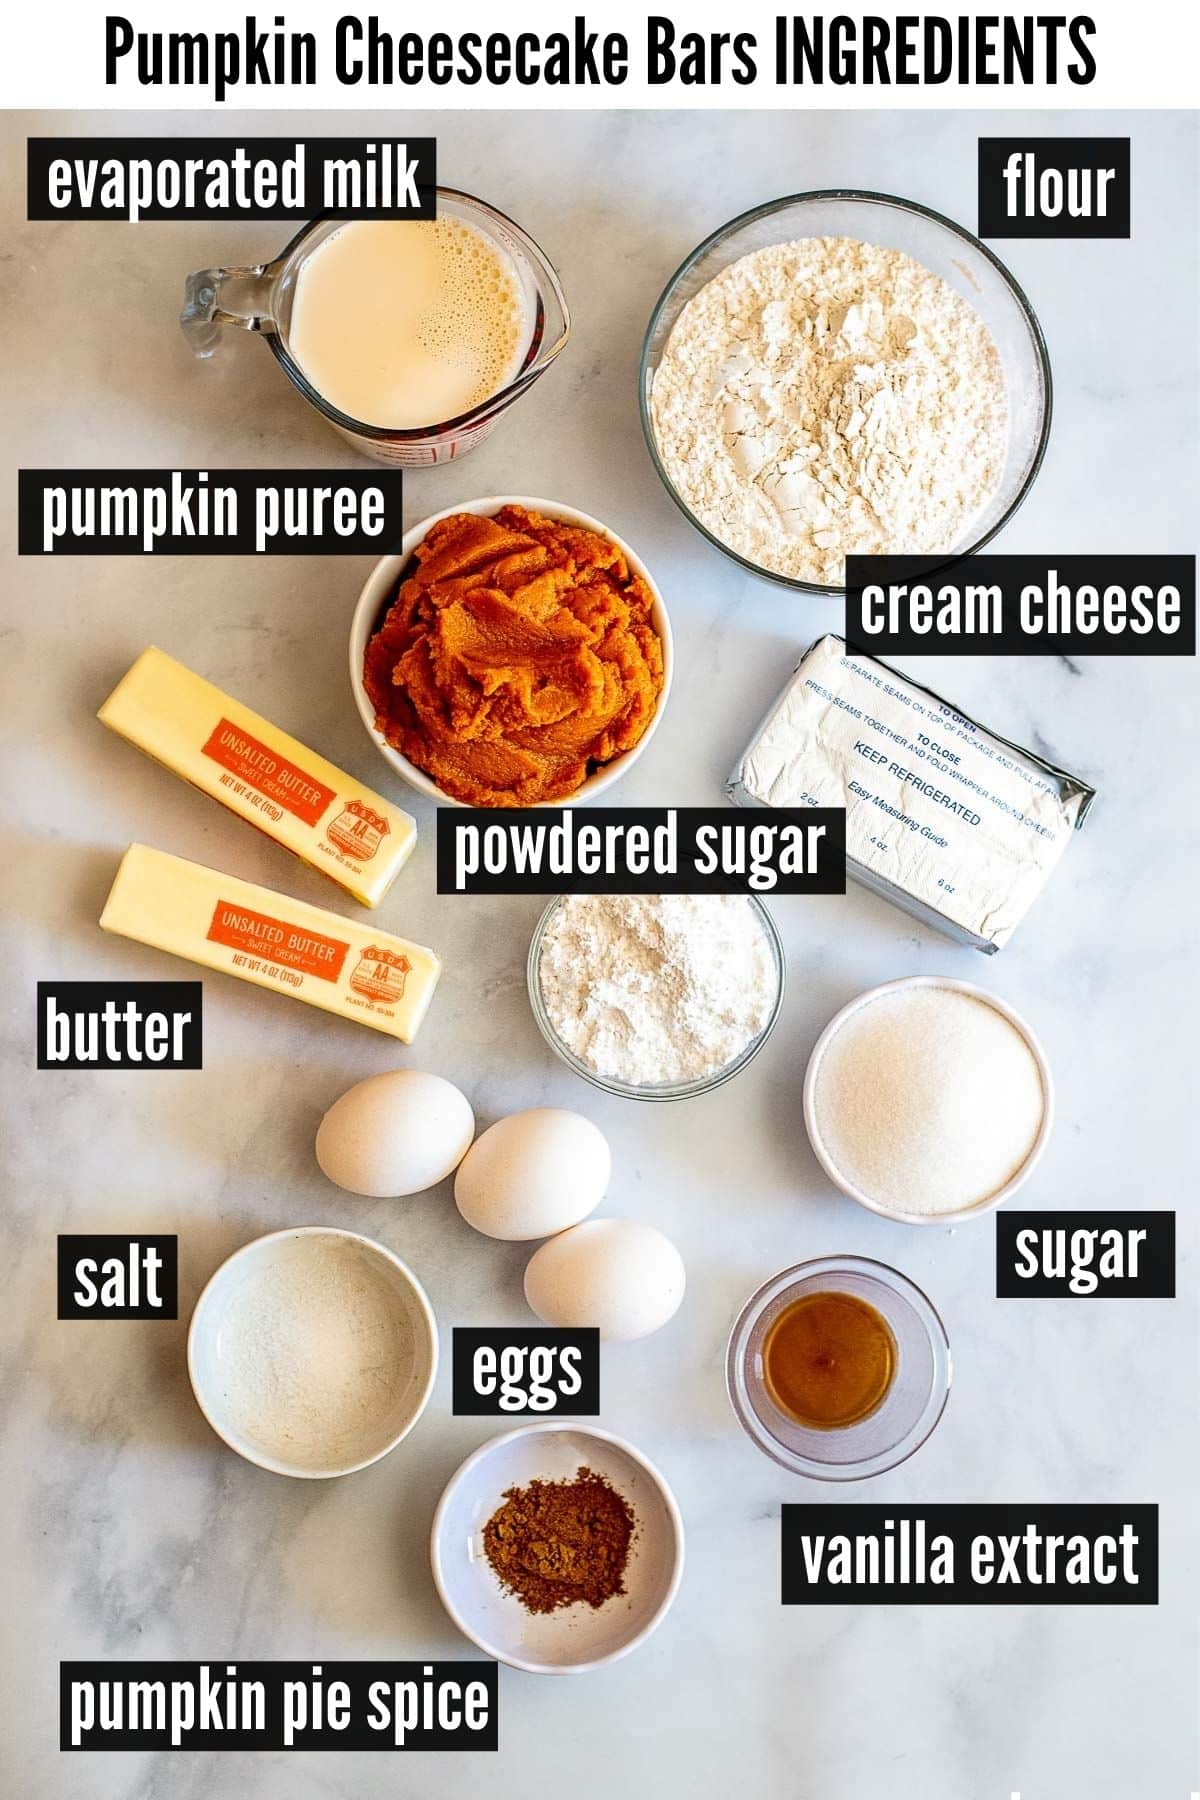 pumpkin cheesecake bars ingredients labelled